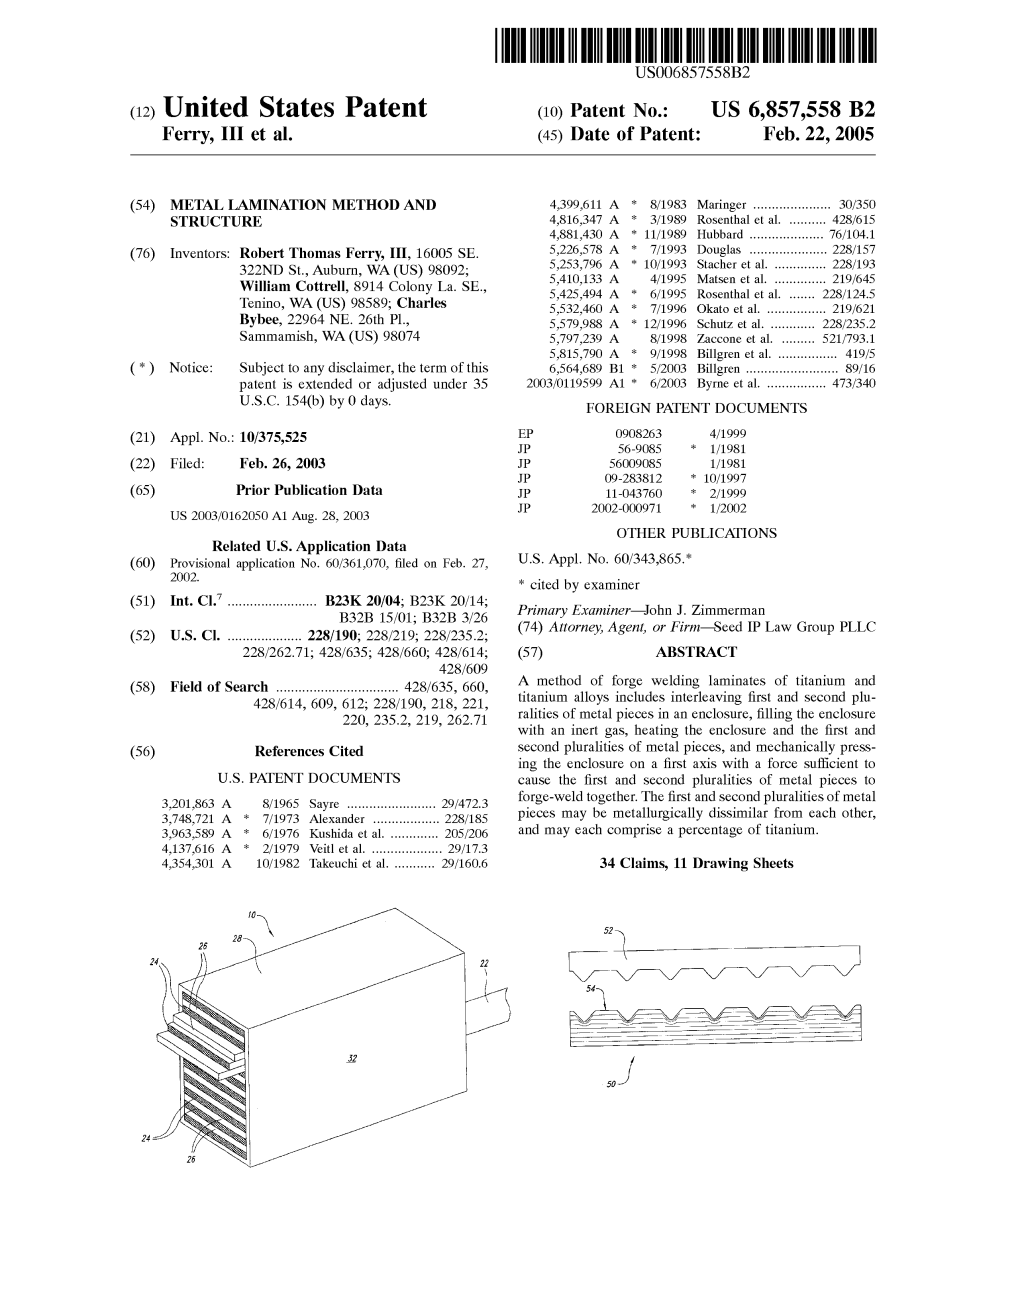 (12) United States Patent (10) Patent No.: US 6,857,558 B2 Ferry, III Et Al